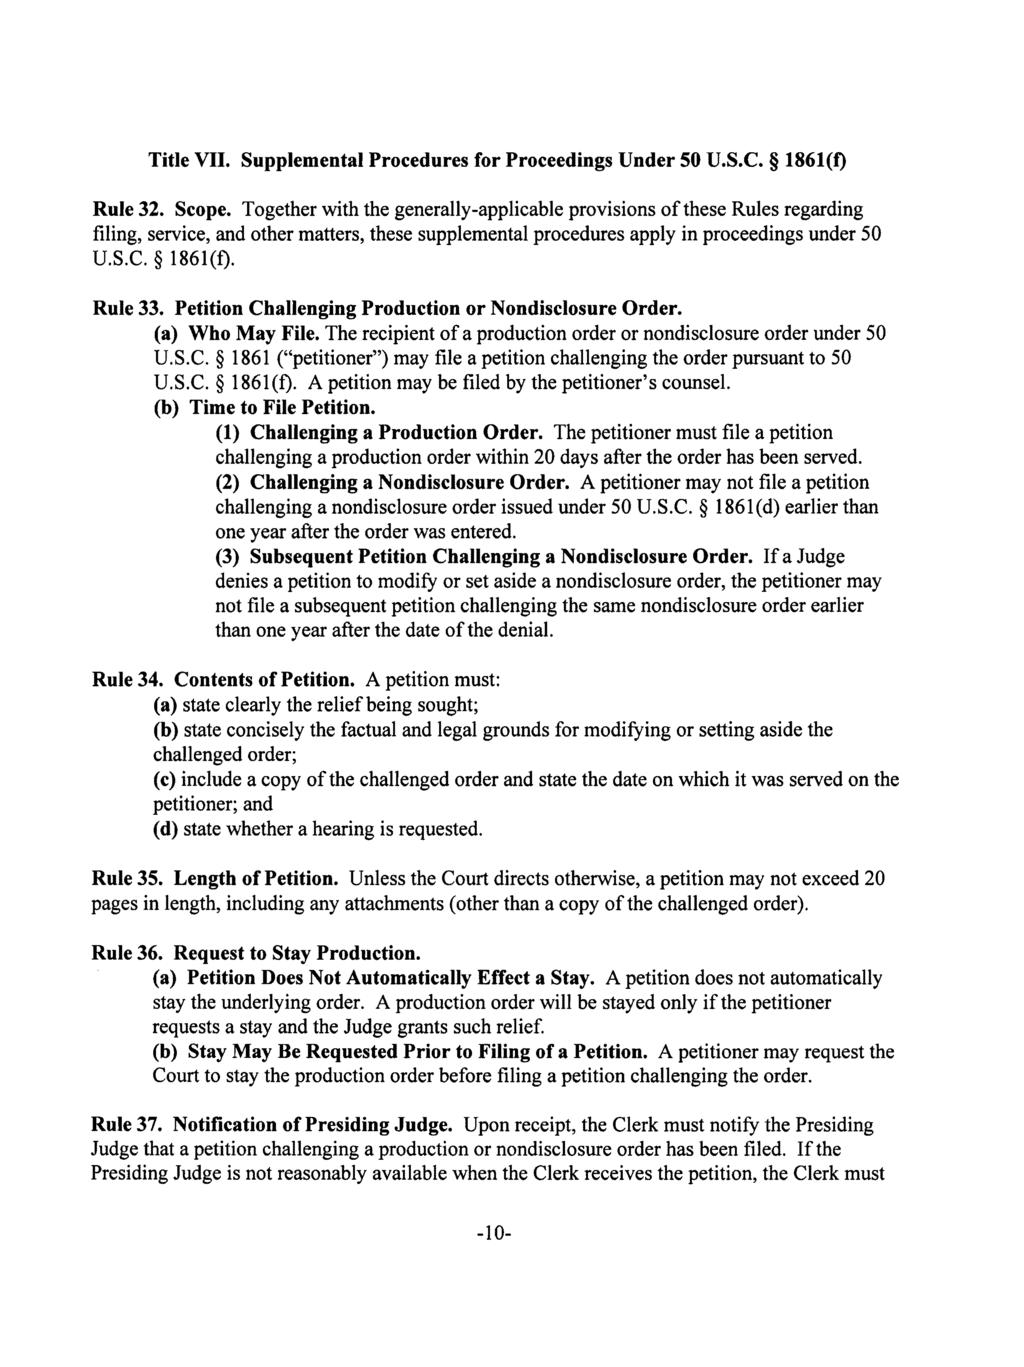 Title VII. Supplemental Procedures for Proceedings Under SO U.S.C. 1861(1) Rule 32. Scope.